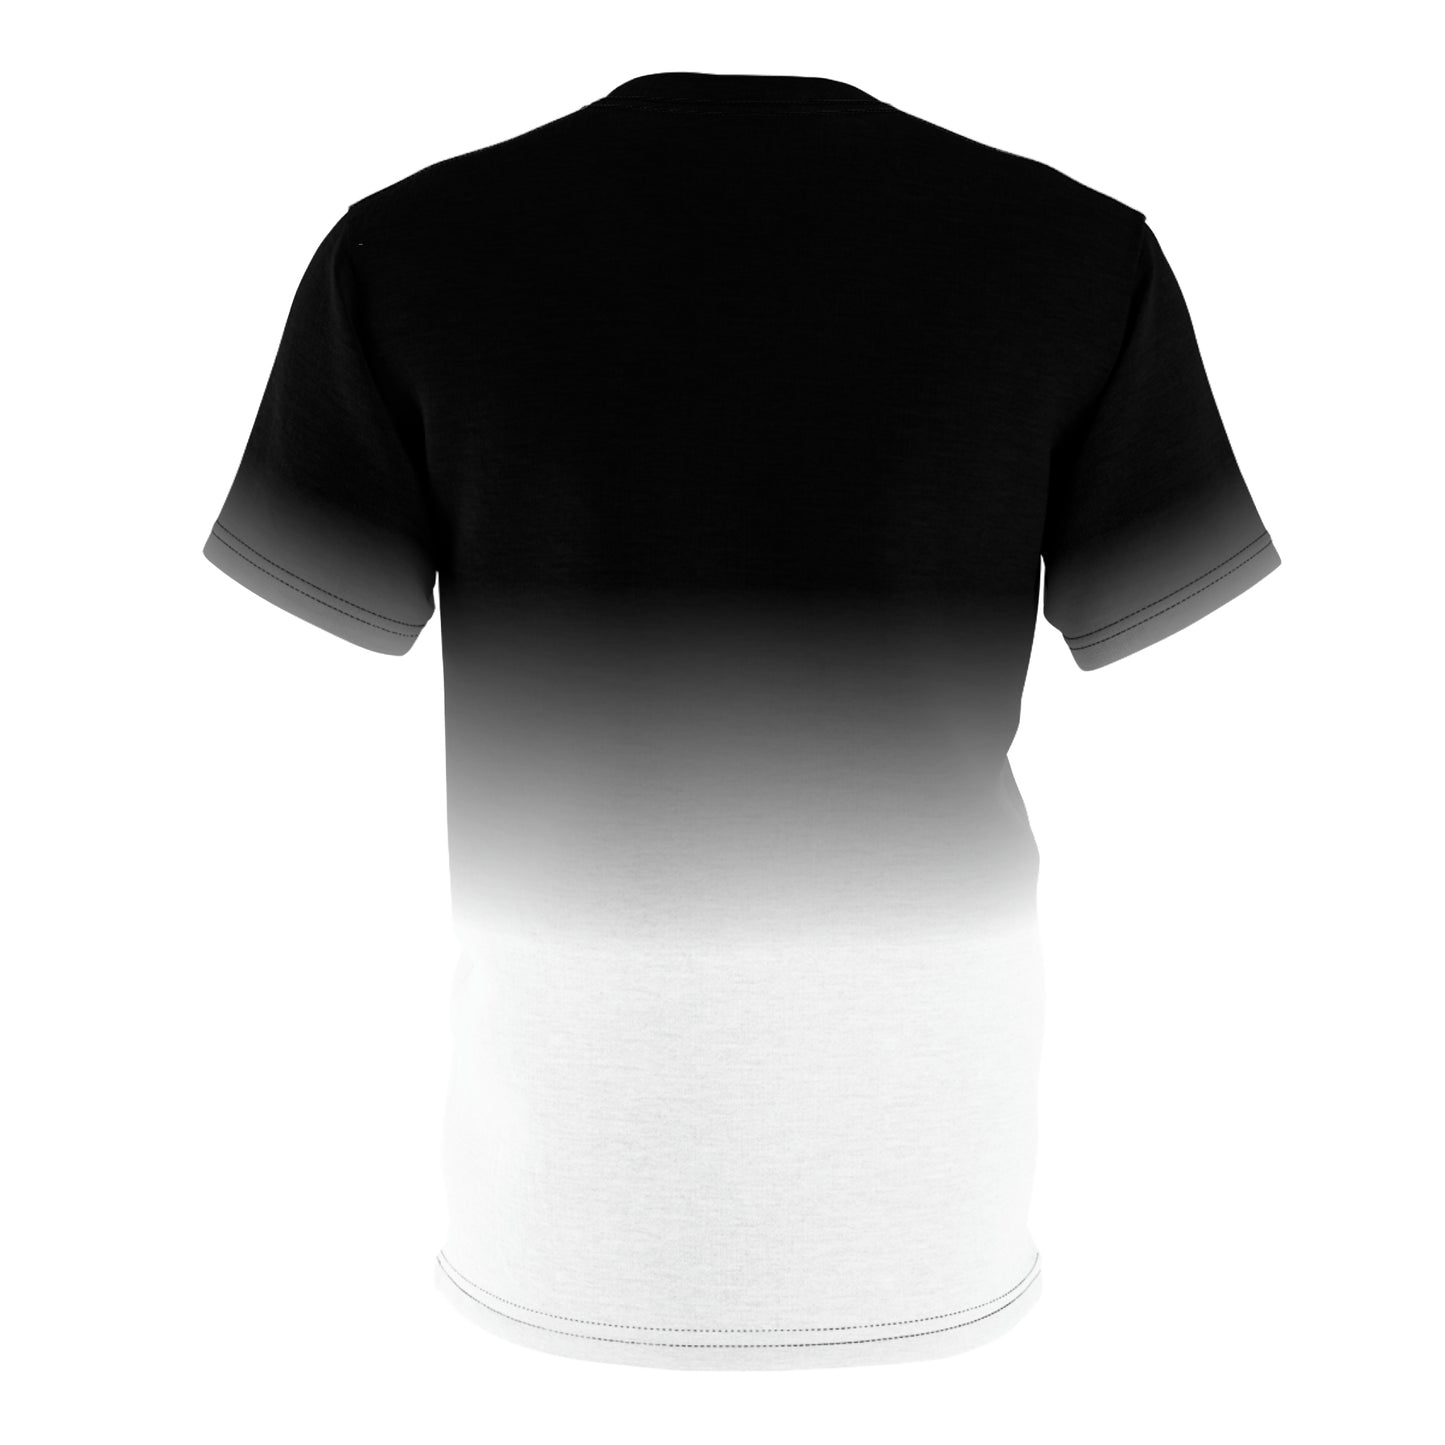 Black White Ombre Tshirt, Gradient Dip Tie Dye Men Women Adult Aesthetic Crewneck Designer Tee Short Sleeve Shirt Top